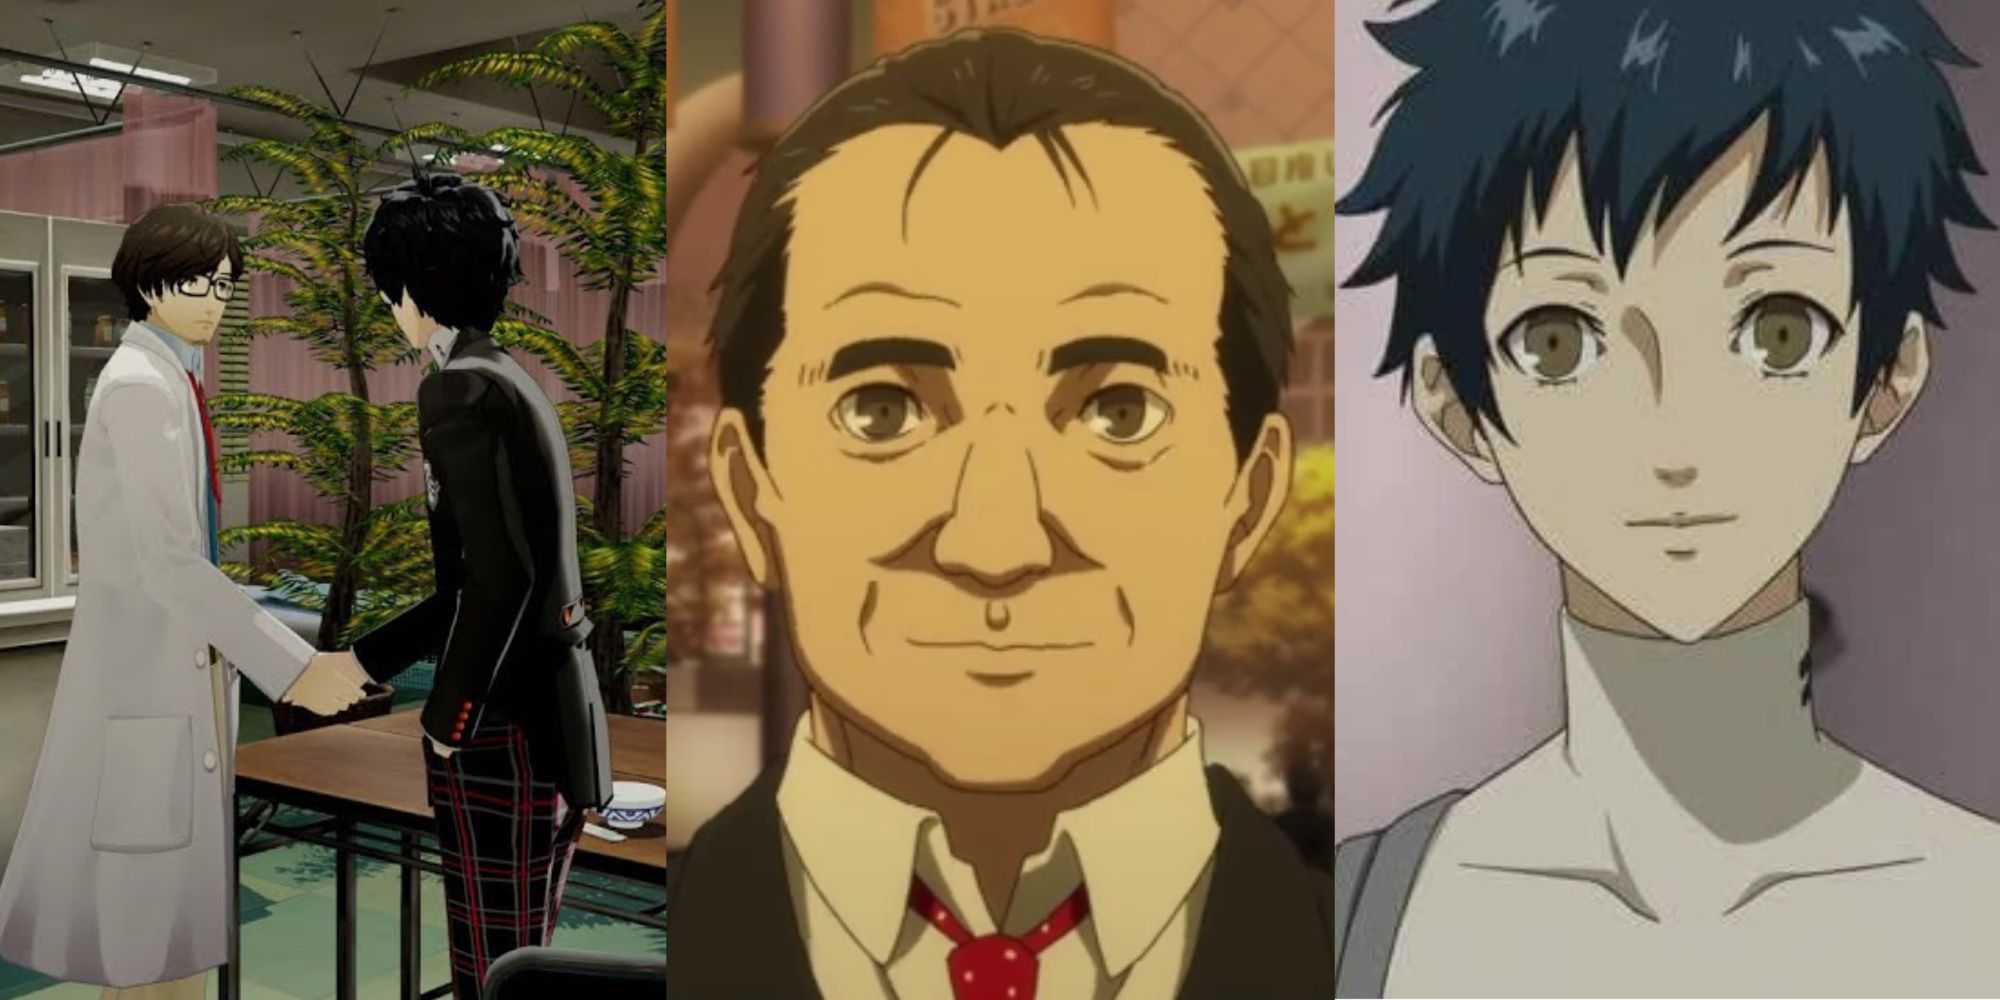 Composite image of Maruki, Joker, Yoshida, and Mishima from Persona 5 Royale